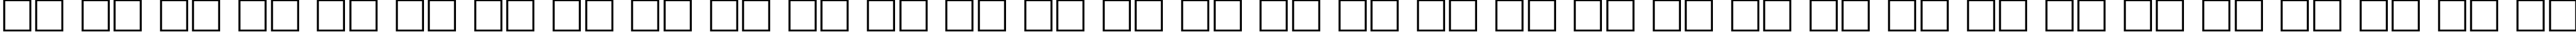 Пример написания русского алфавита шрифтом Izhitsa